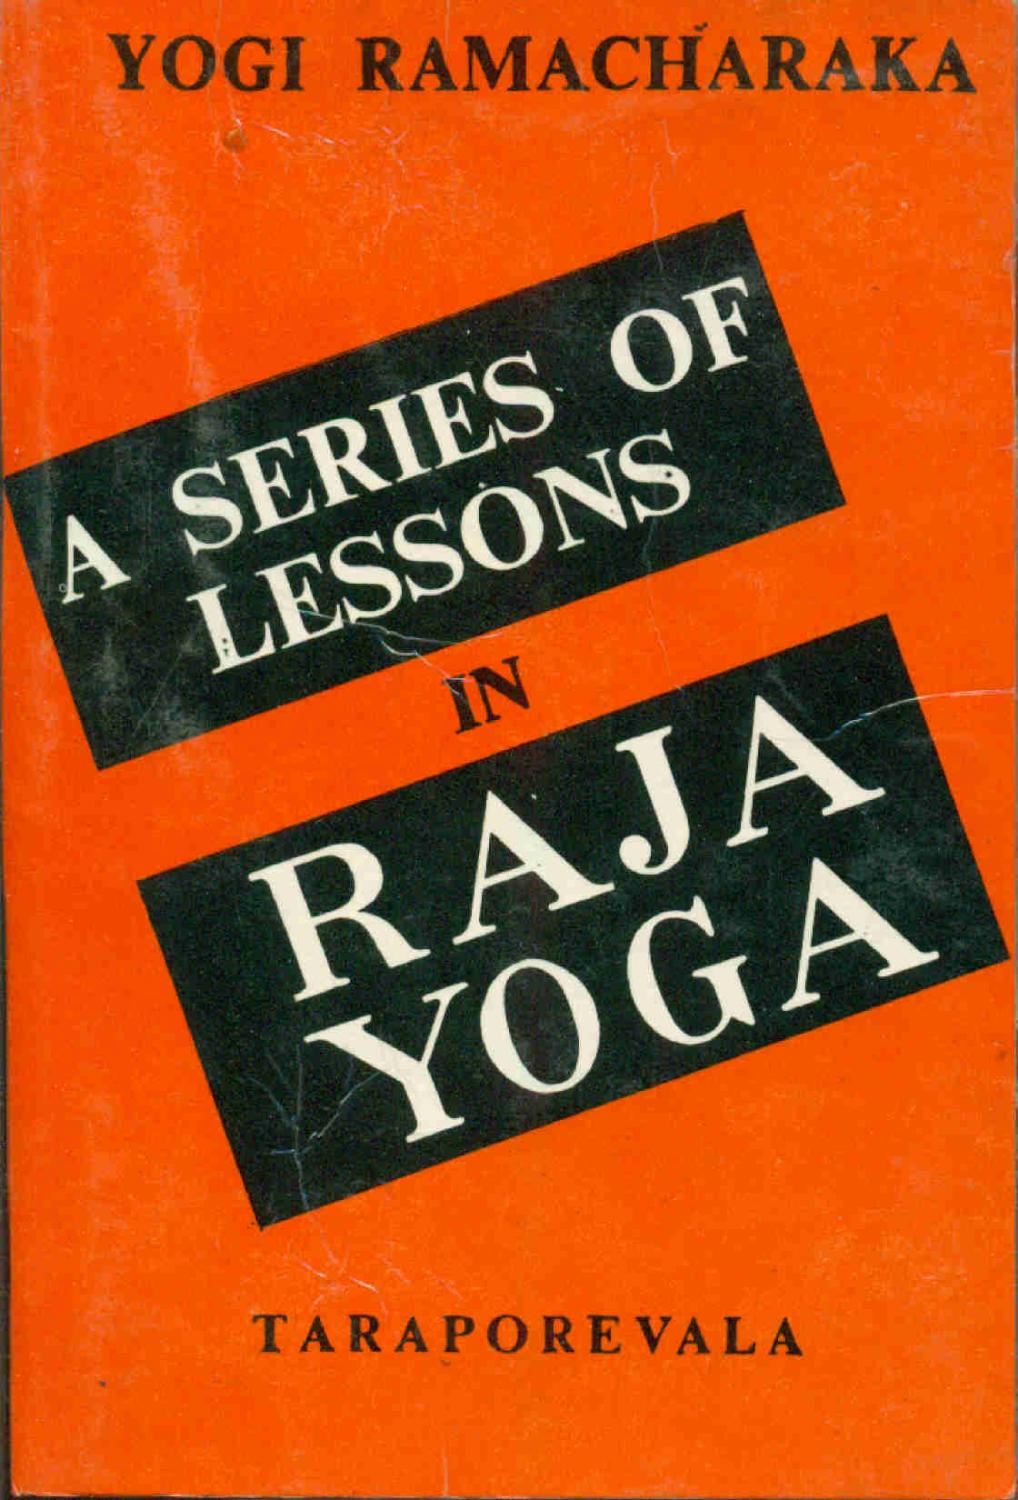 A Series of Lessons in Raja Yoga (Yoga of Wisdom series/Taraporevala) (image)